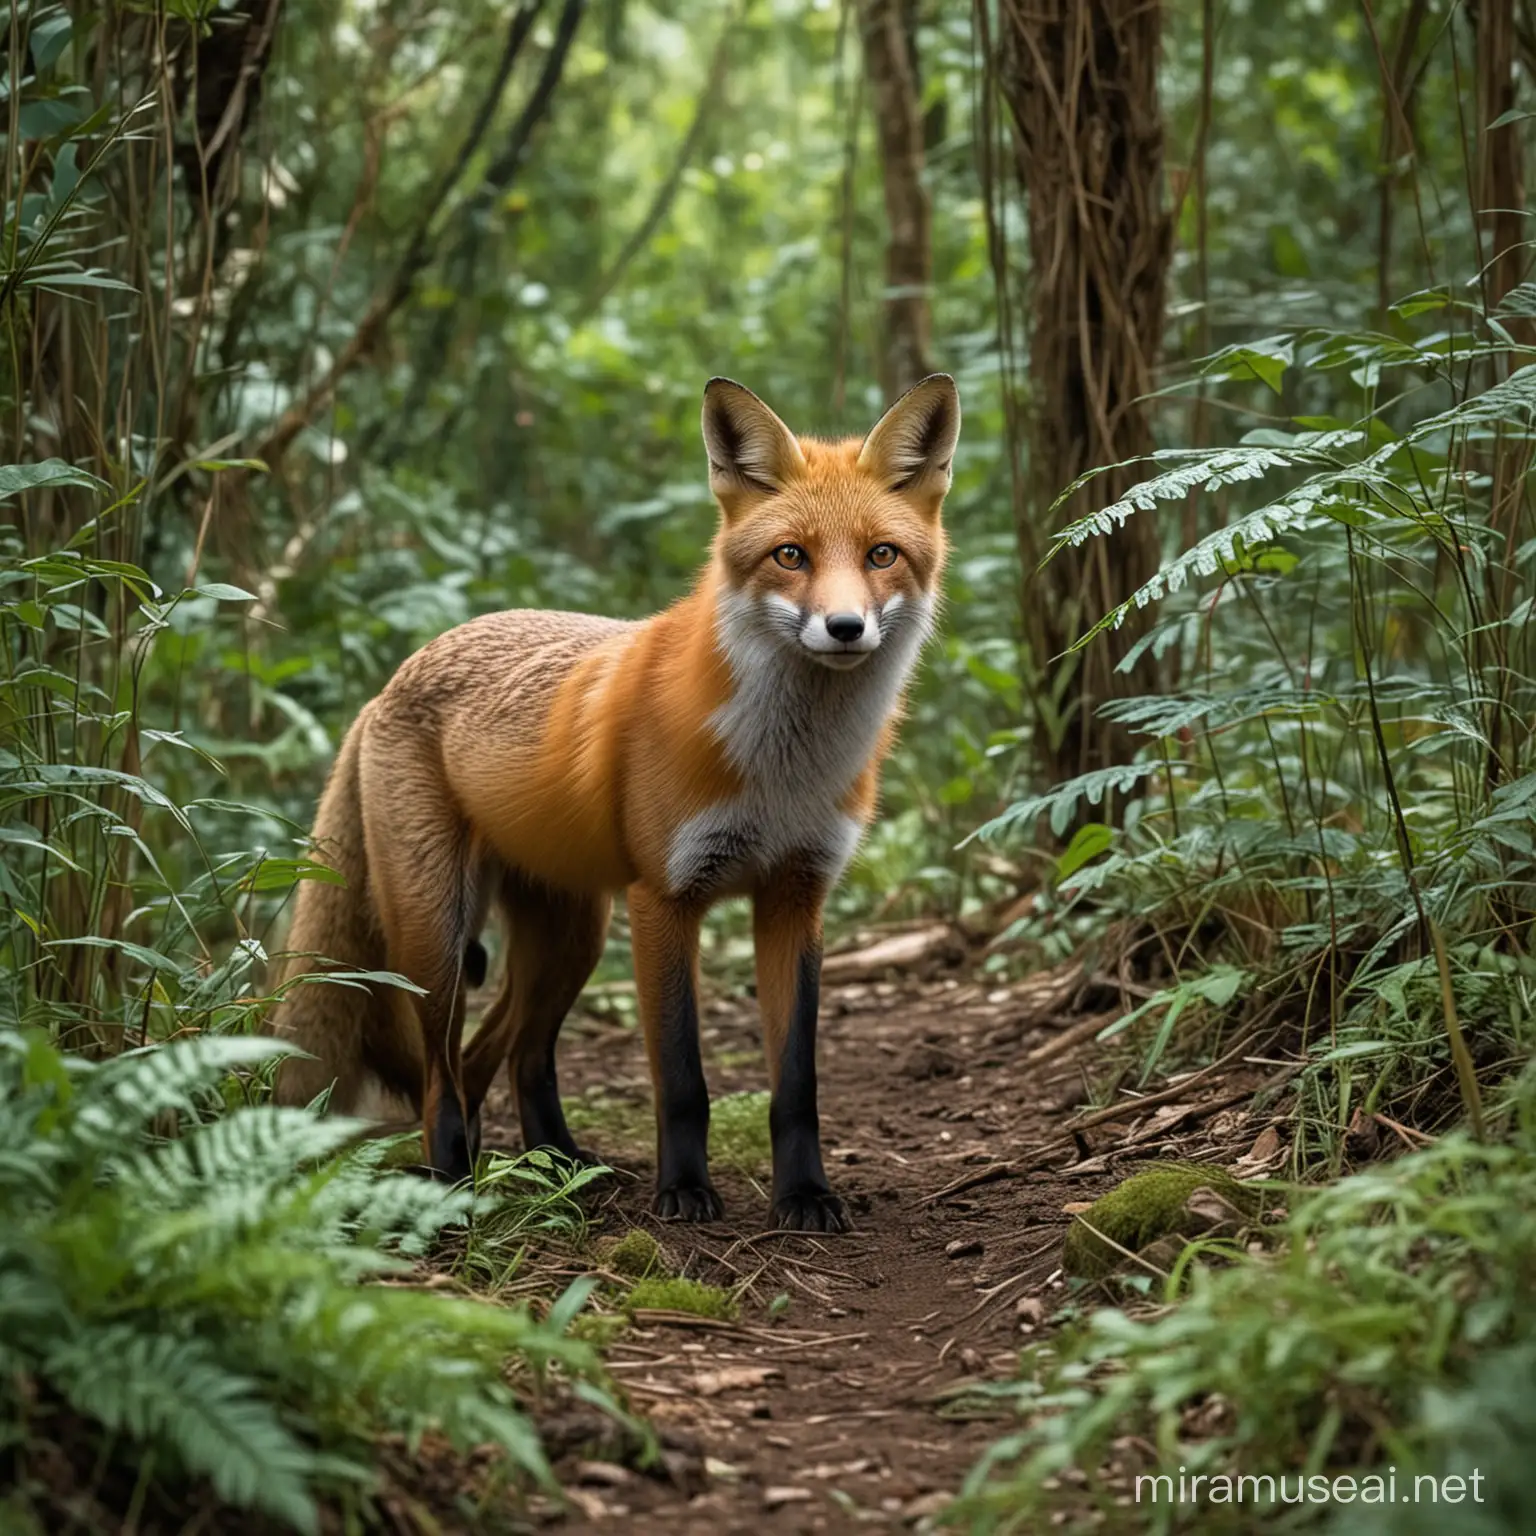 Majestic Fox Roaming Through Lush Jungle Habitat